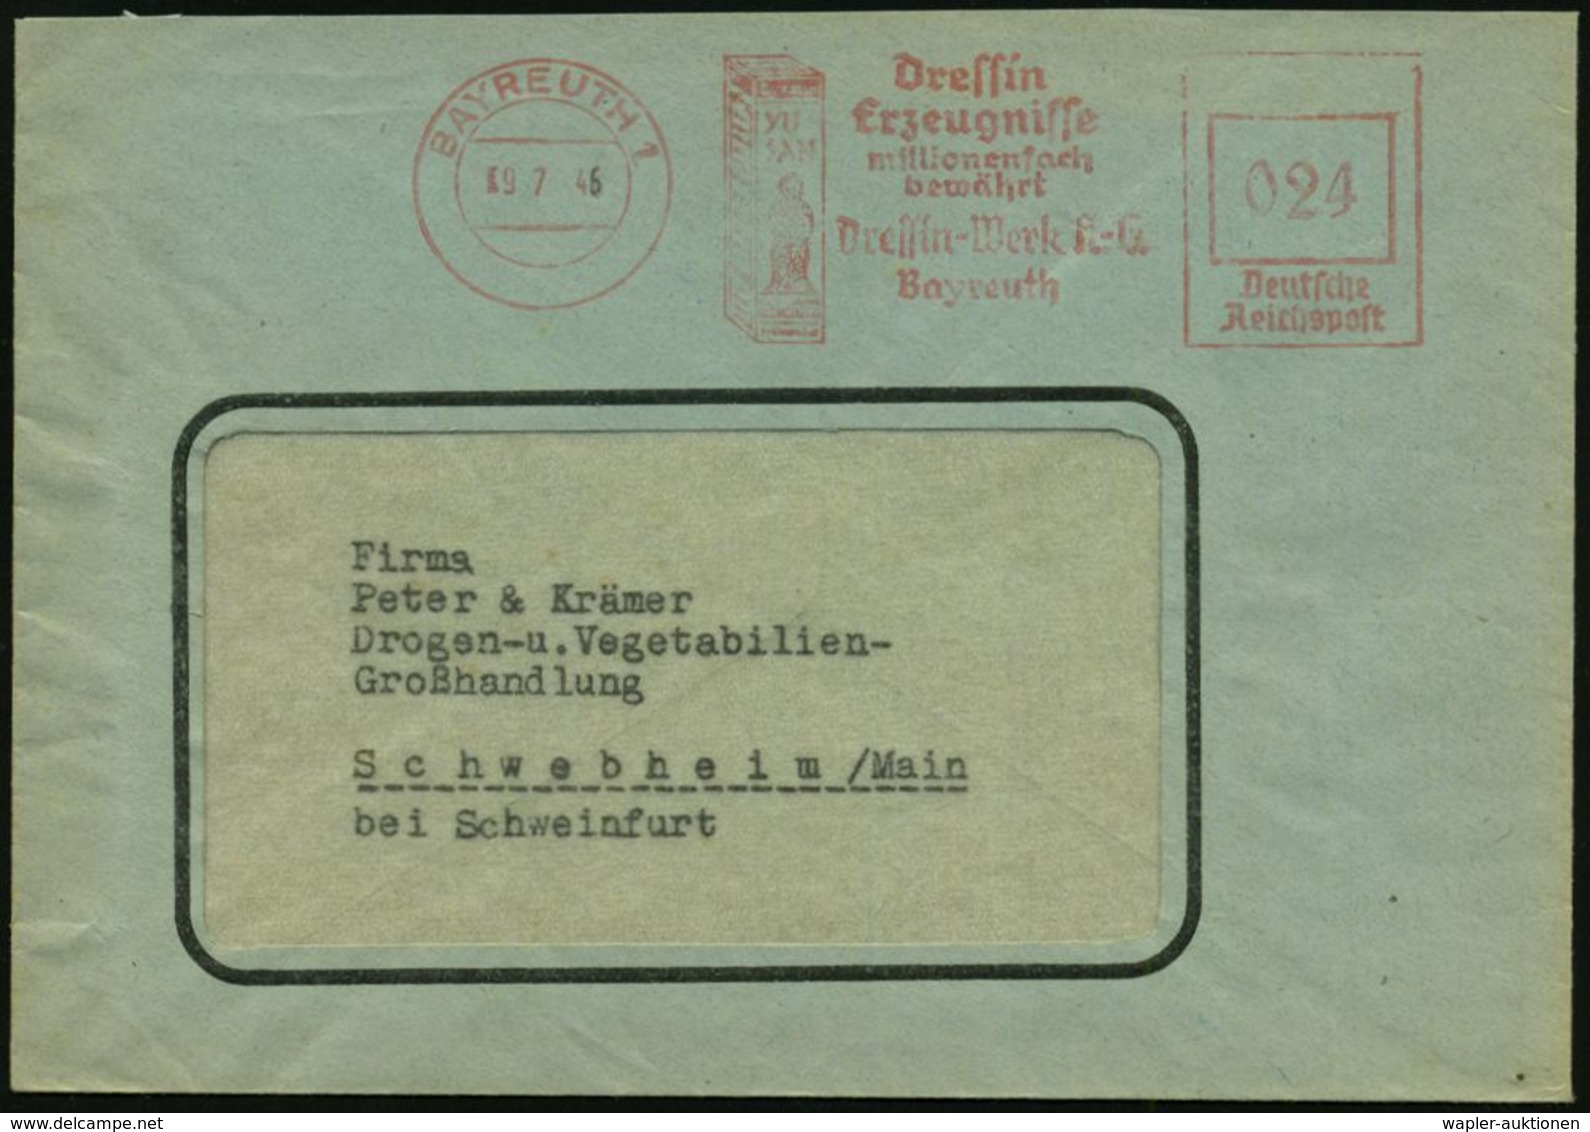 HAAR / BART / RASUR / FRISEUR : BAYREUTH 1/ YU SAN/ Dressin/ Erzeugnisse../ Dressin-Werke K.G. 1945 (9.7.) Aptierter AFS - Pharmazie